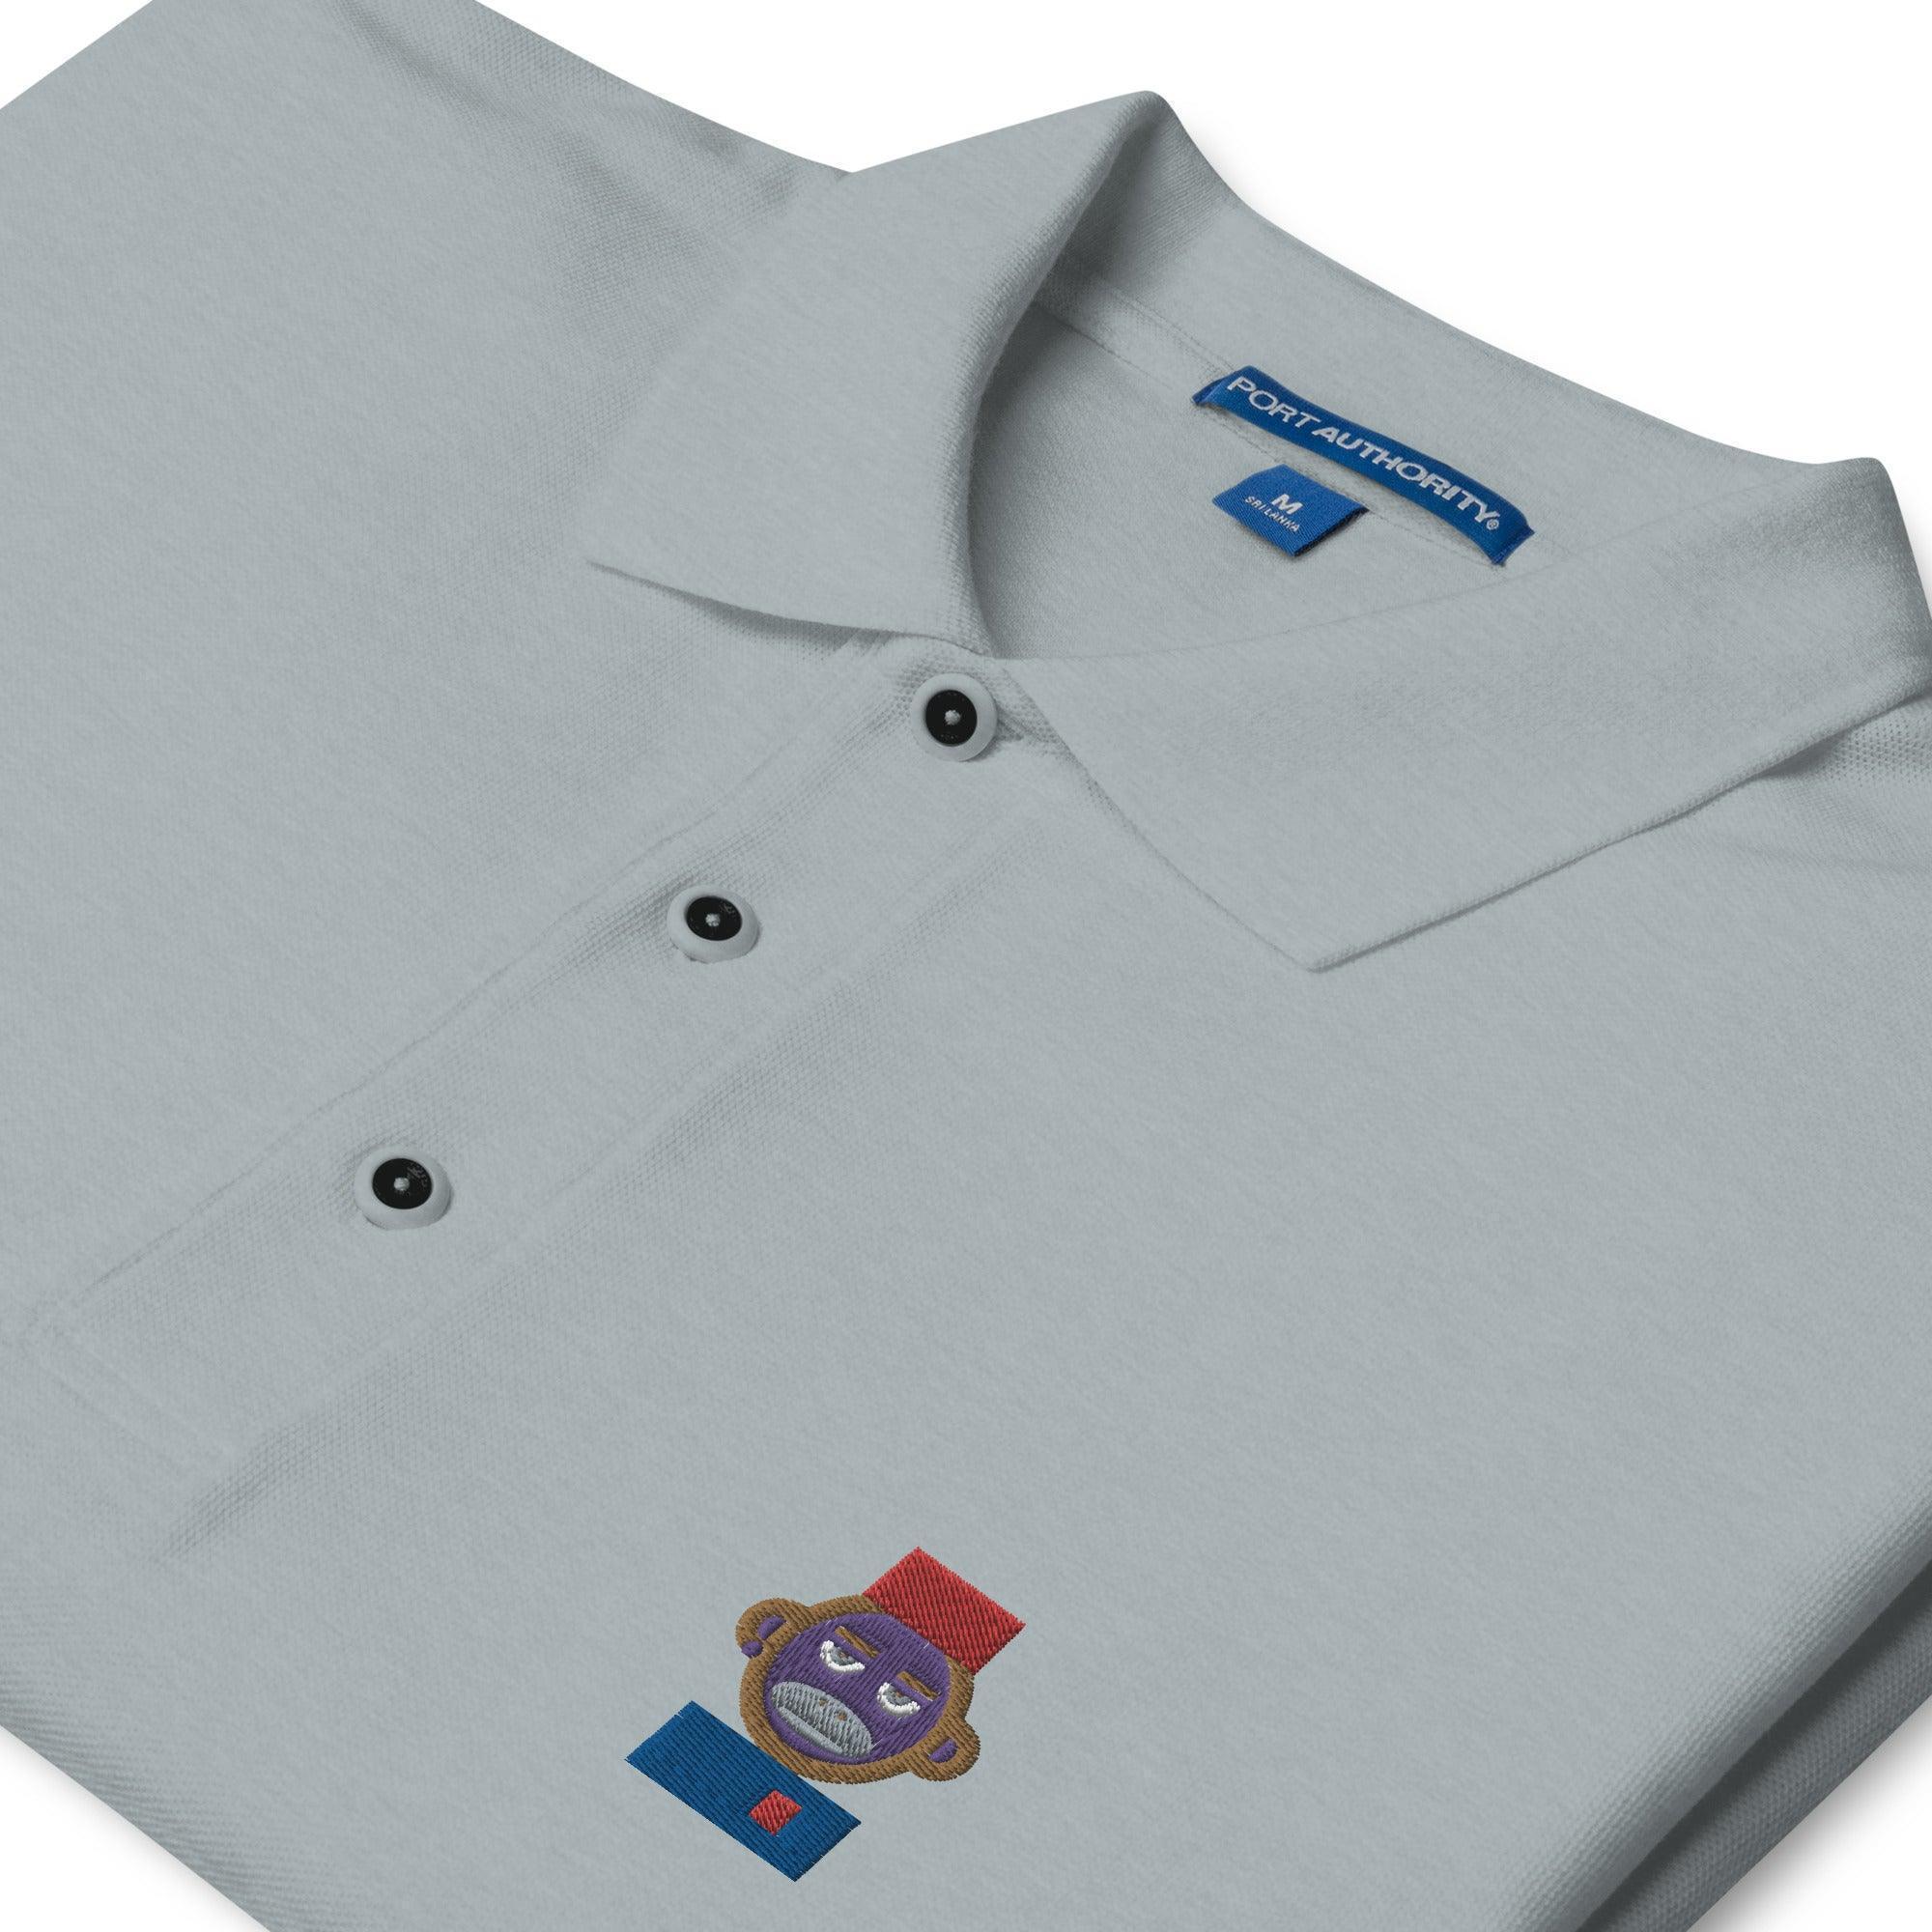 OnChain Monkey P1 Polo Shirt - InvestmenTees